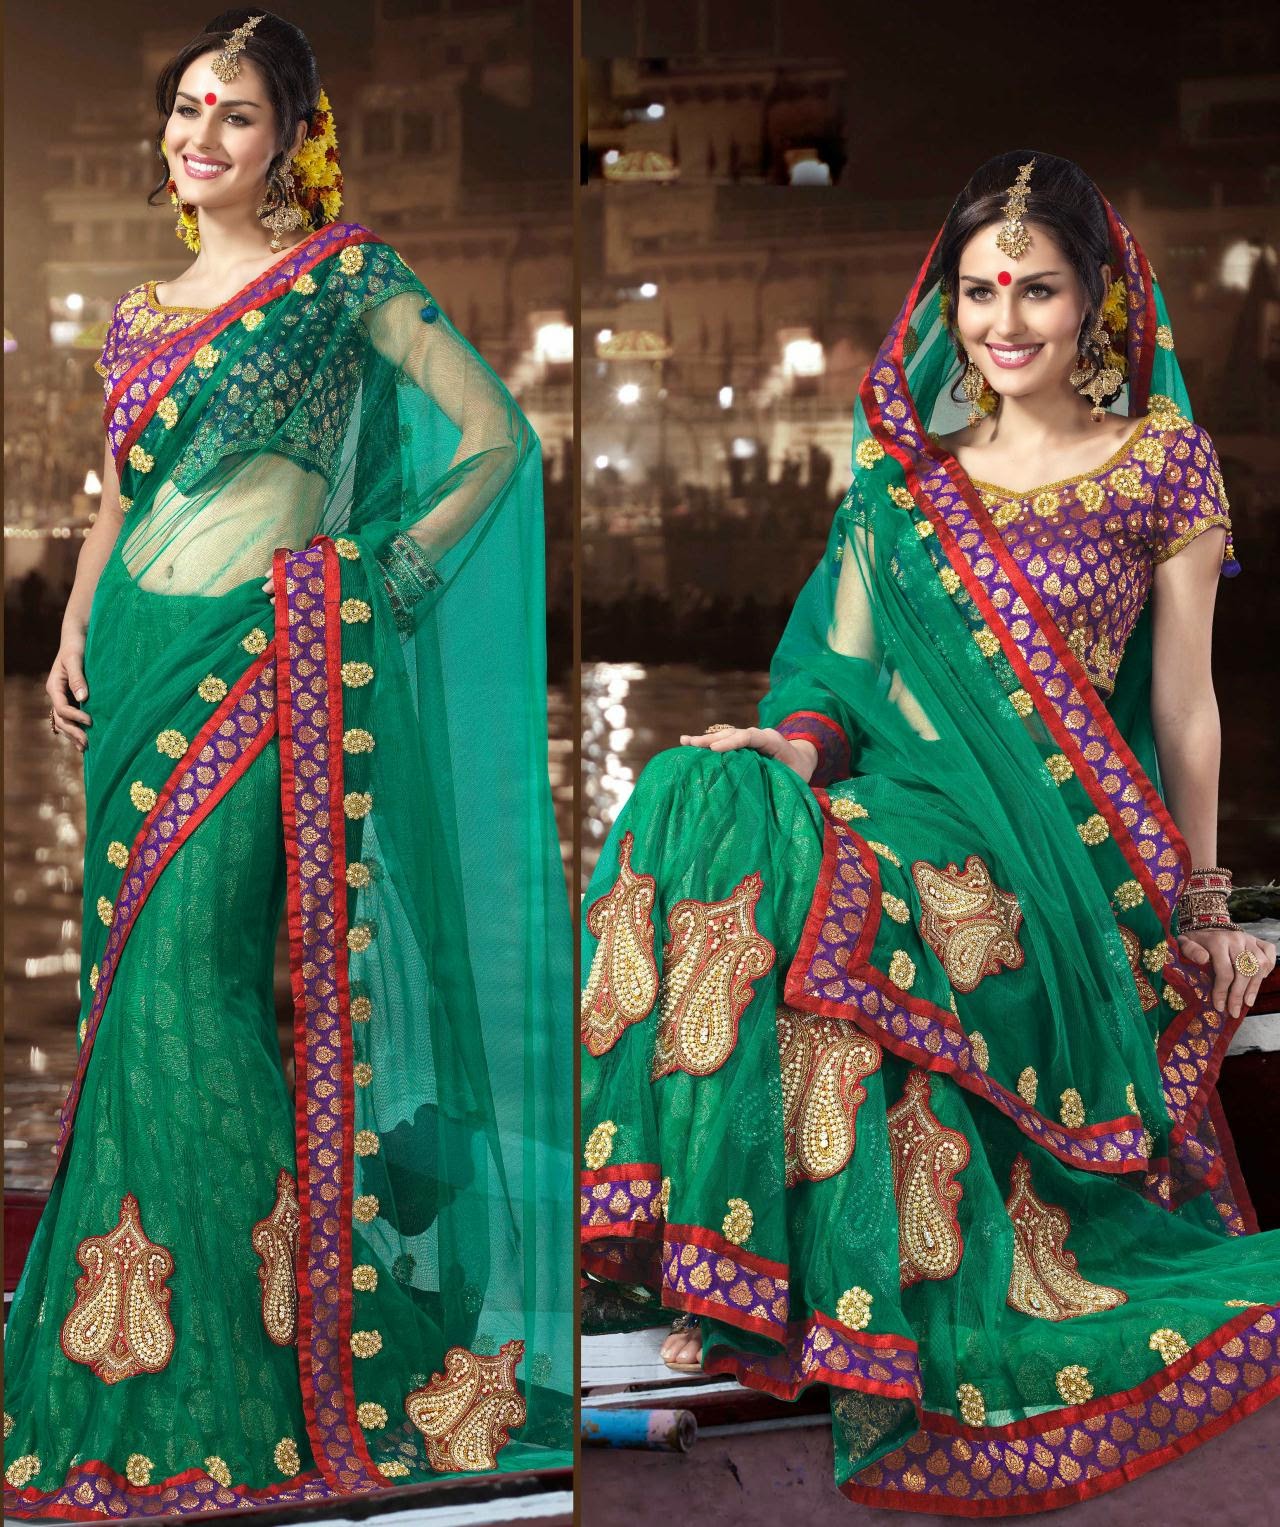 dulha dulhan fondo de pantalla hd,verde,sari,ropa,amarillo,rosado